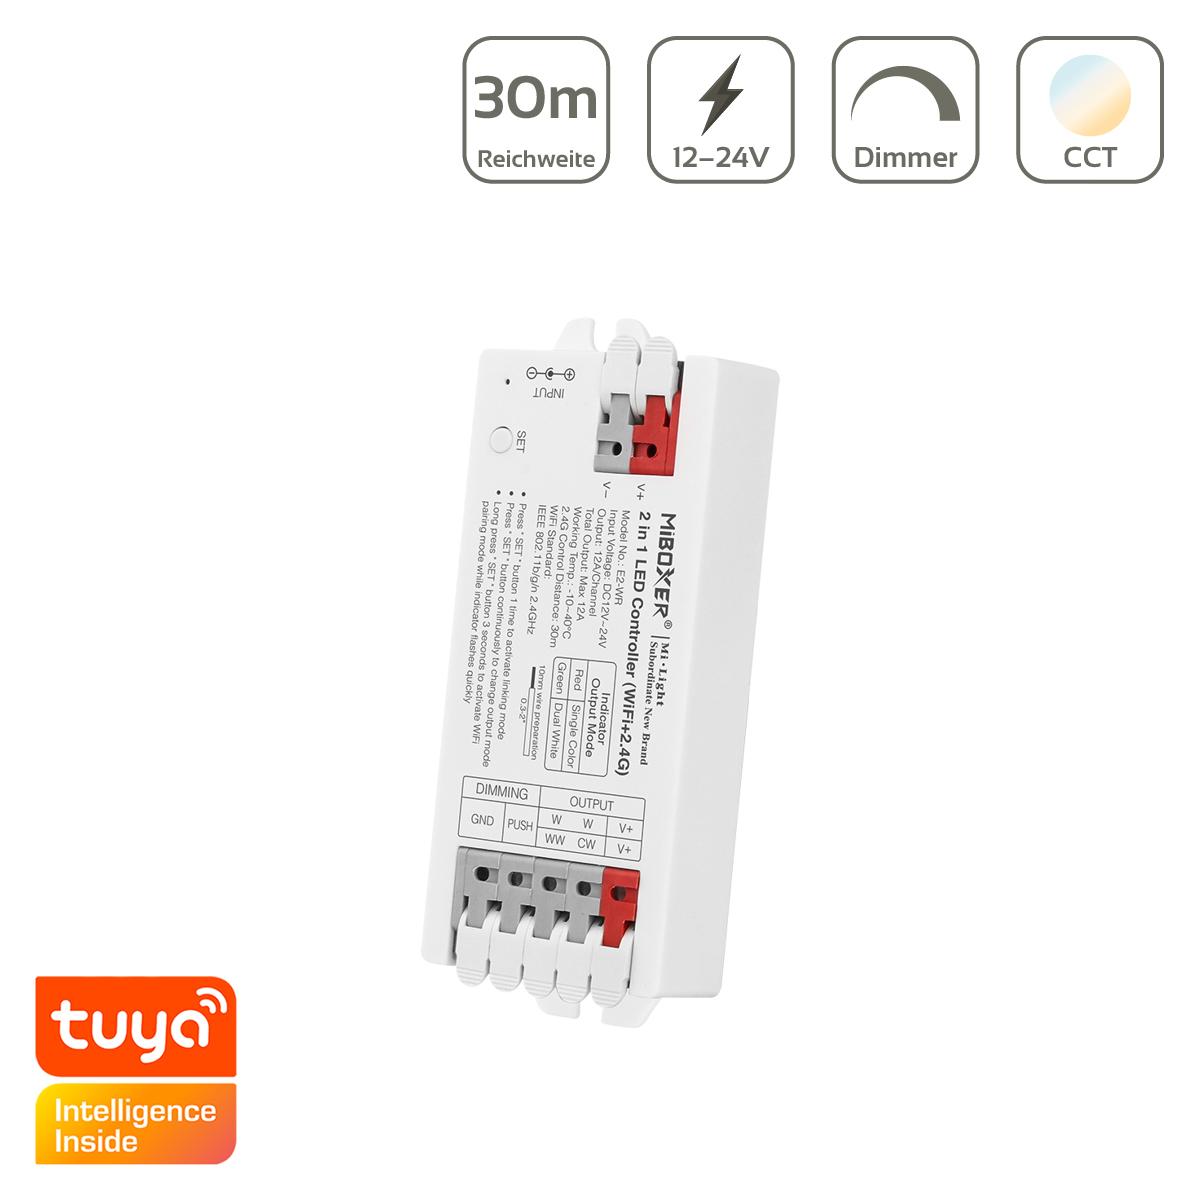 MiBoxer Easy CCT WIFI LED Controller 2 in 1 Einfarbig / Dual White 12/24V Tuya Alexa Google Steuerung E2-WR